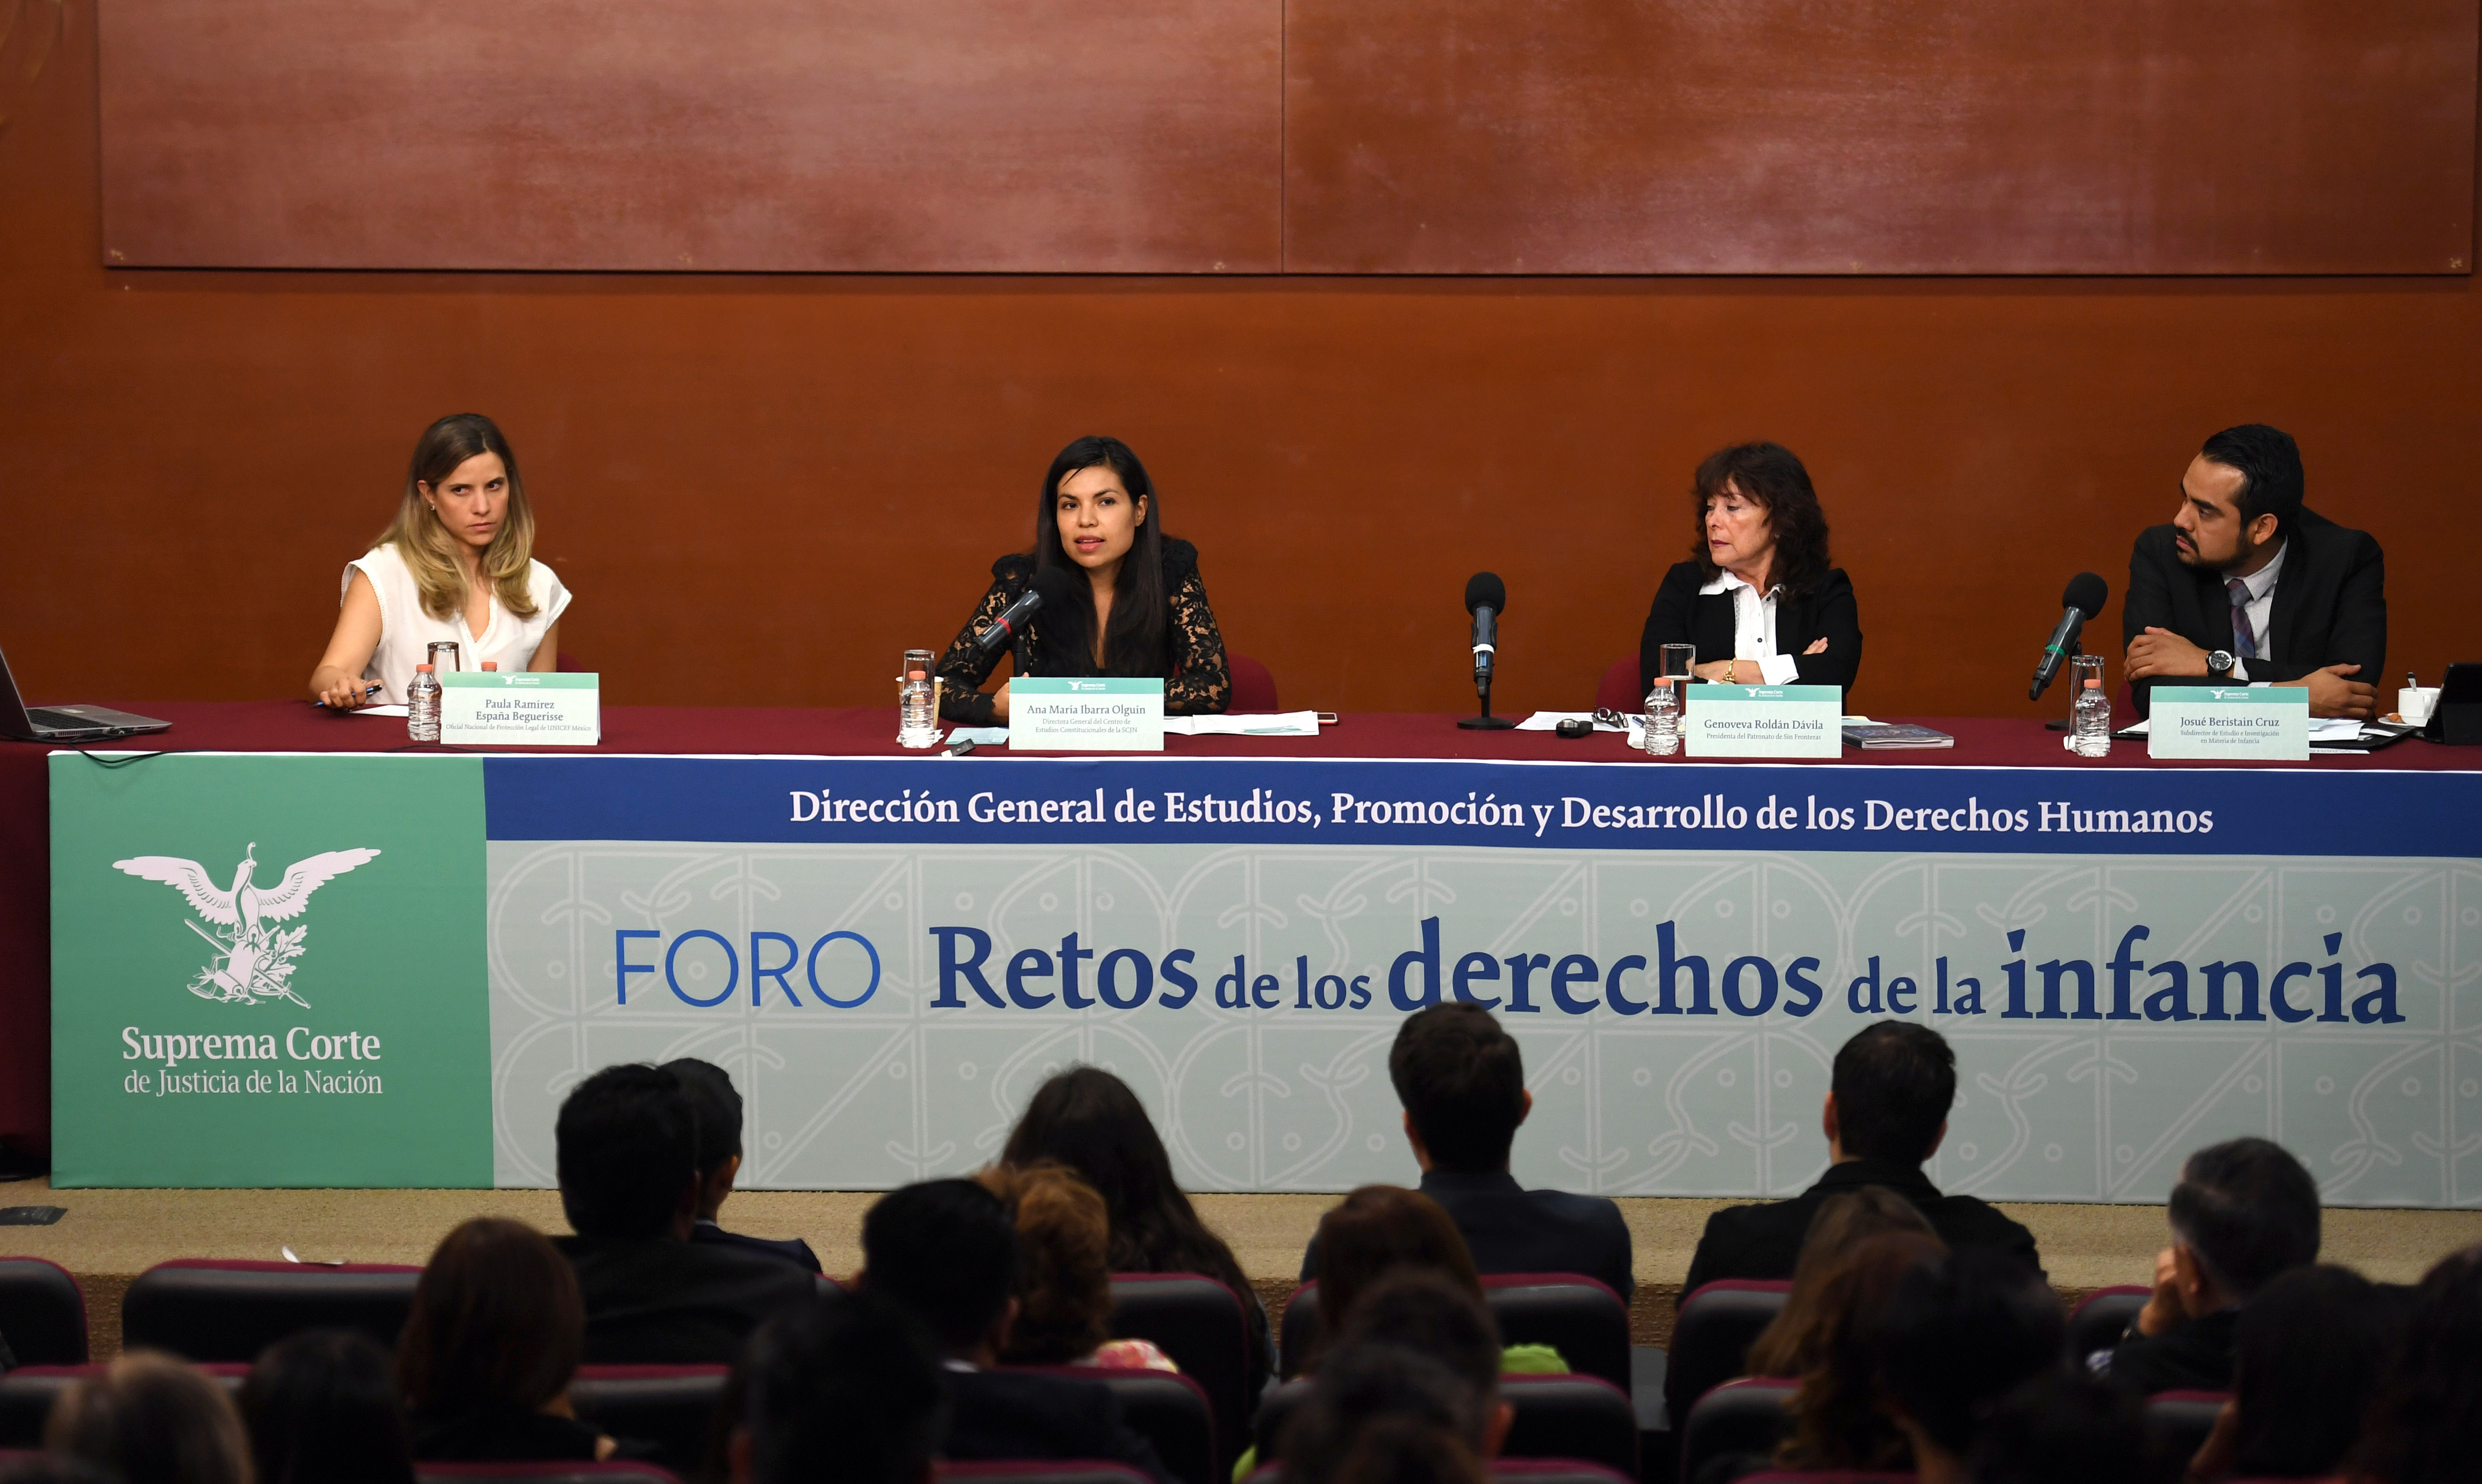 Paula Ramírez España, Ana María Ibarra Olguín, Genoveva Roldán Dávila, Josué Beristain Cruz